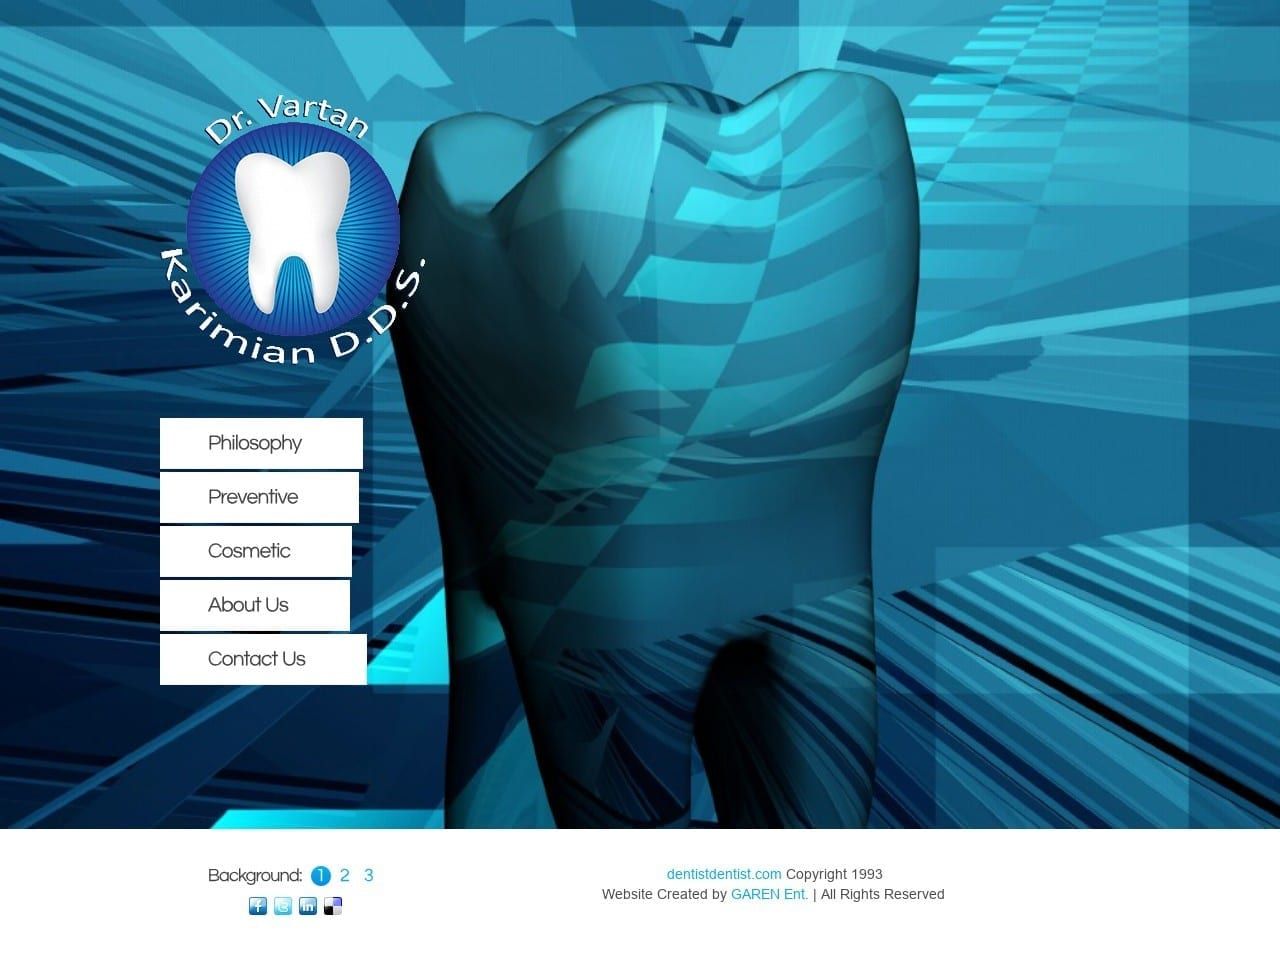 Vartan Karimian DDS Website Screenshot from dentistdentist.com